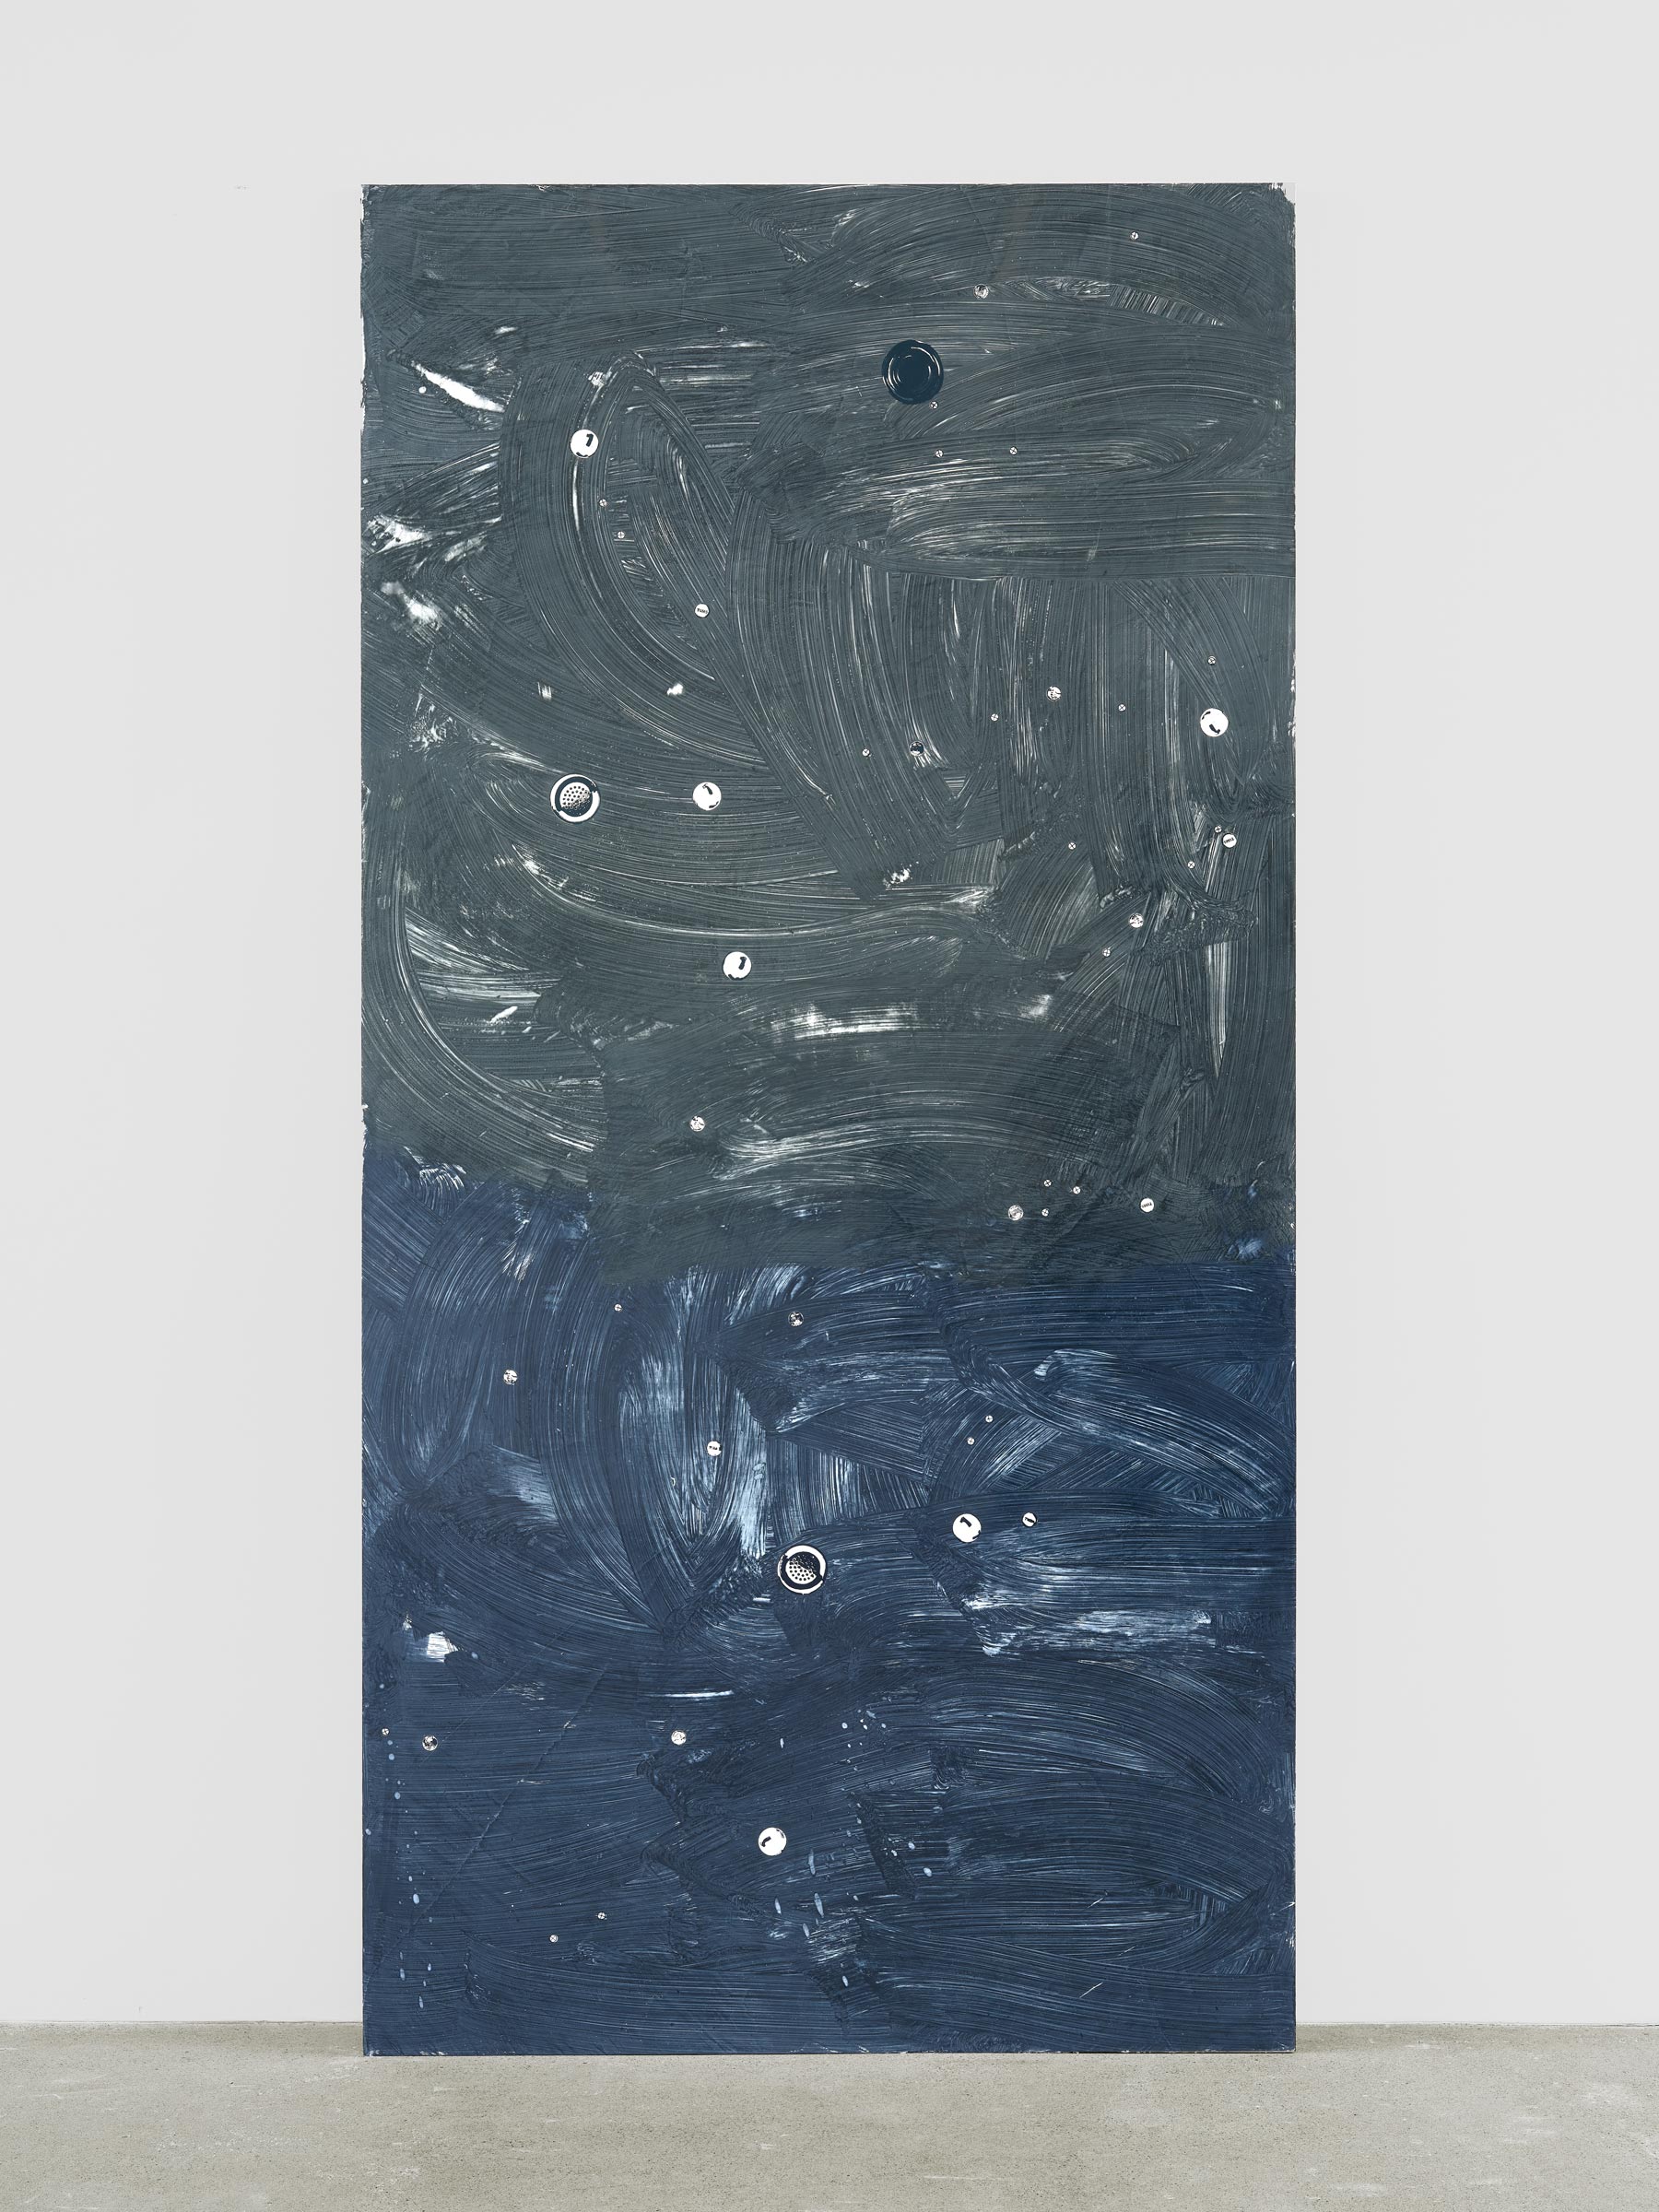 Alex Kwartler, Night Sky III, 2022, Venetian plaster and enamel on plywood, 96 x 48 in.